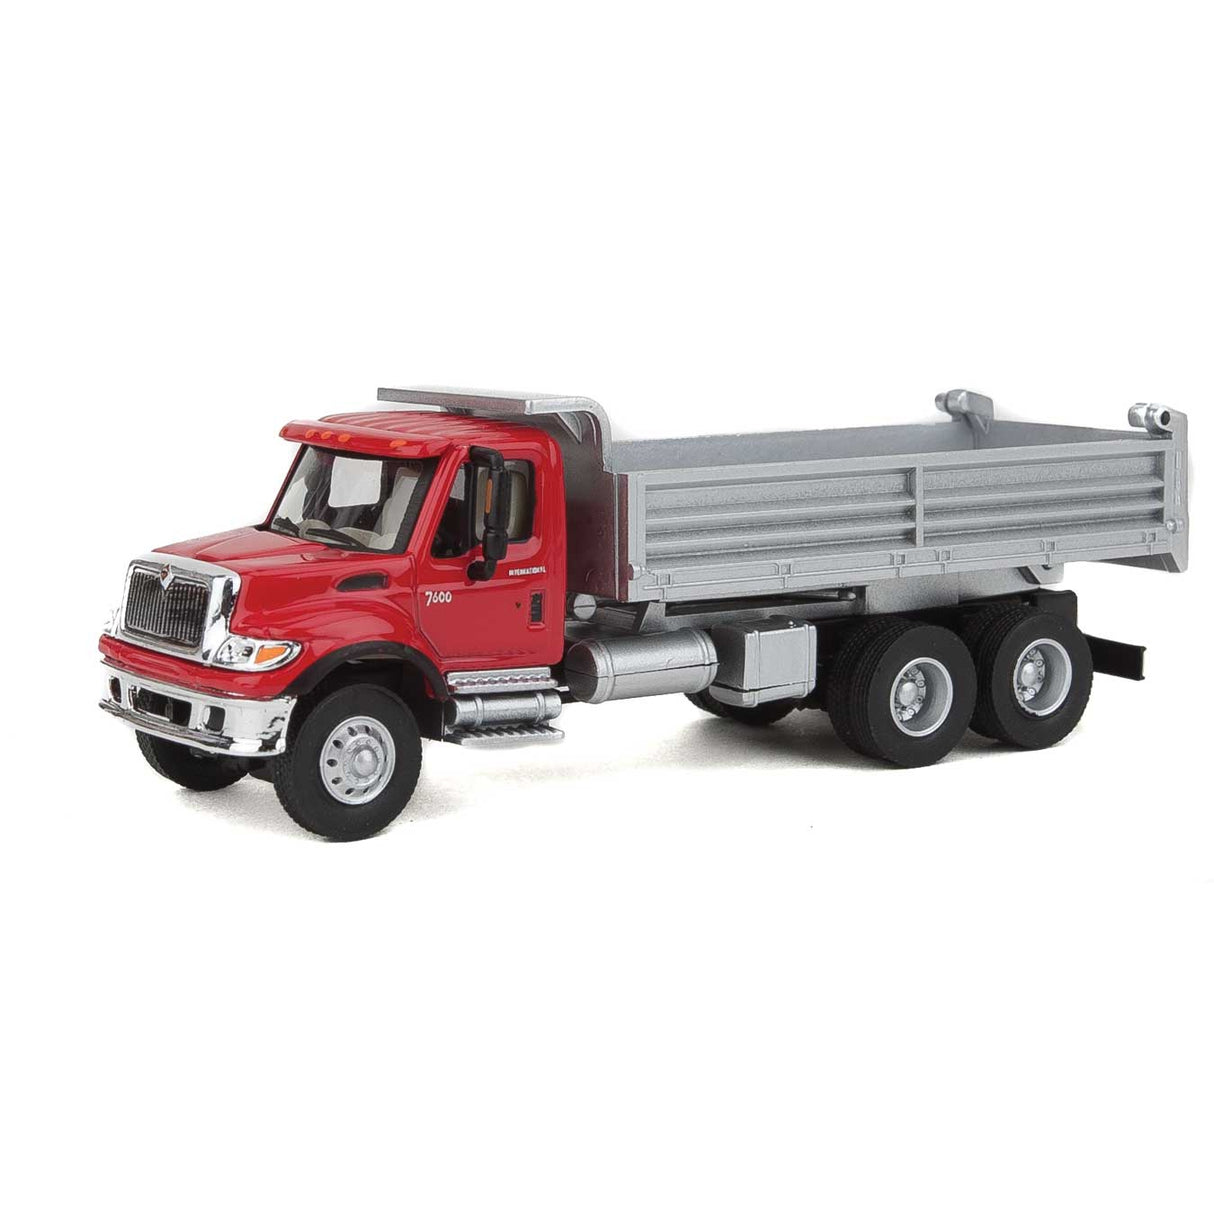 Walthers International(R) 7600 3-Axle Heavy-Duty Dump Truck - Assembled -- Red Cab, Silver Dump Body